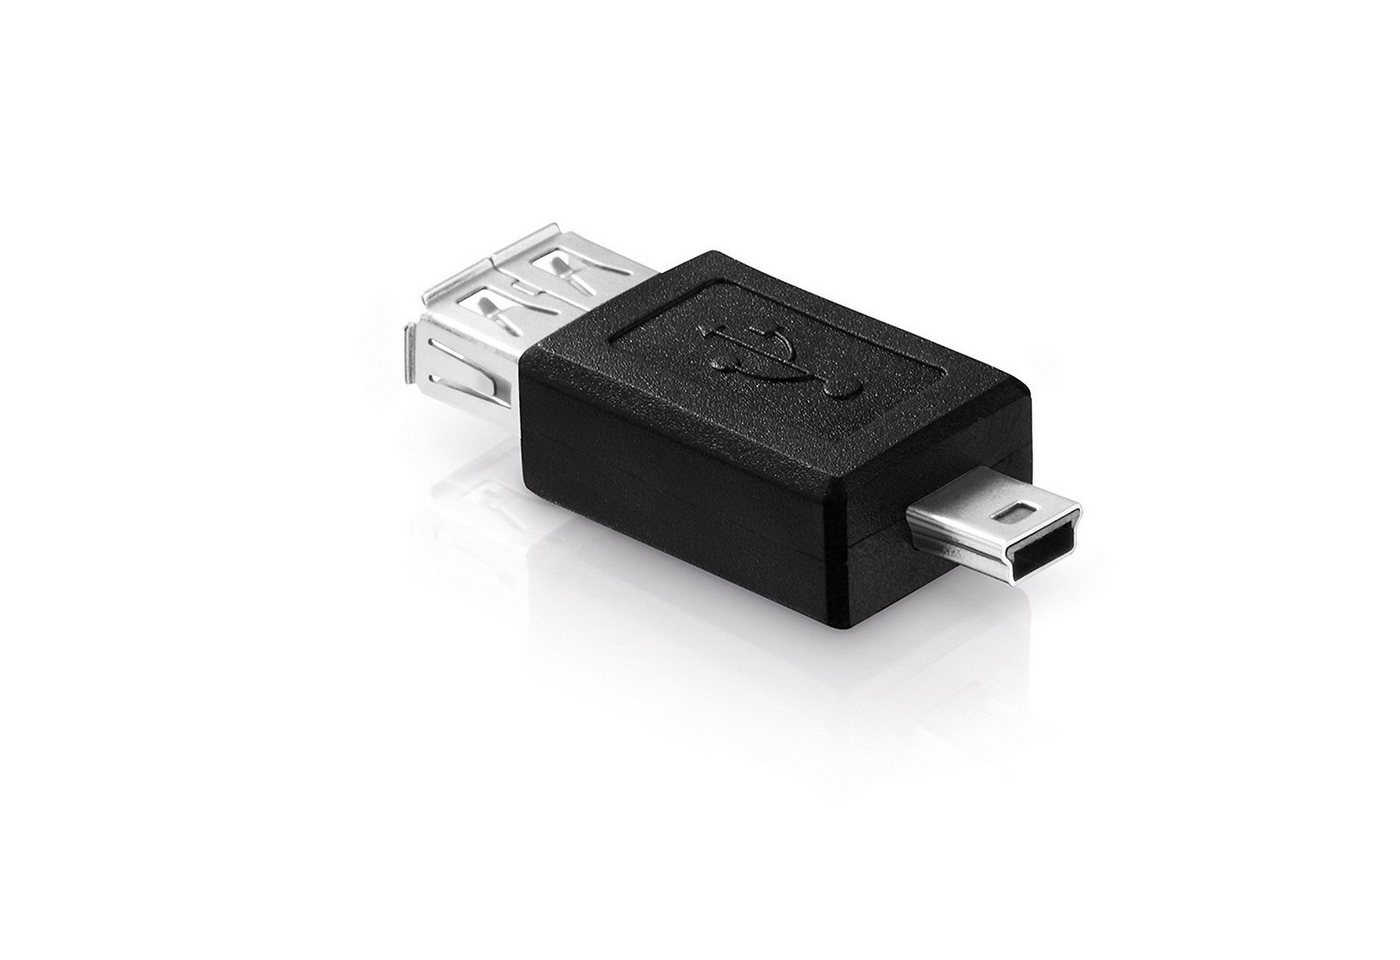 adaptare adaptare 41007 USB 2.0-Adapter Mini-Stecker Typ B 5-polig auf Buchse USB-Kabel von adaptare